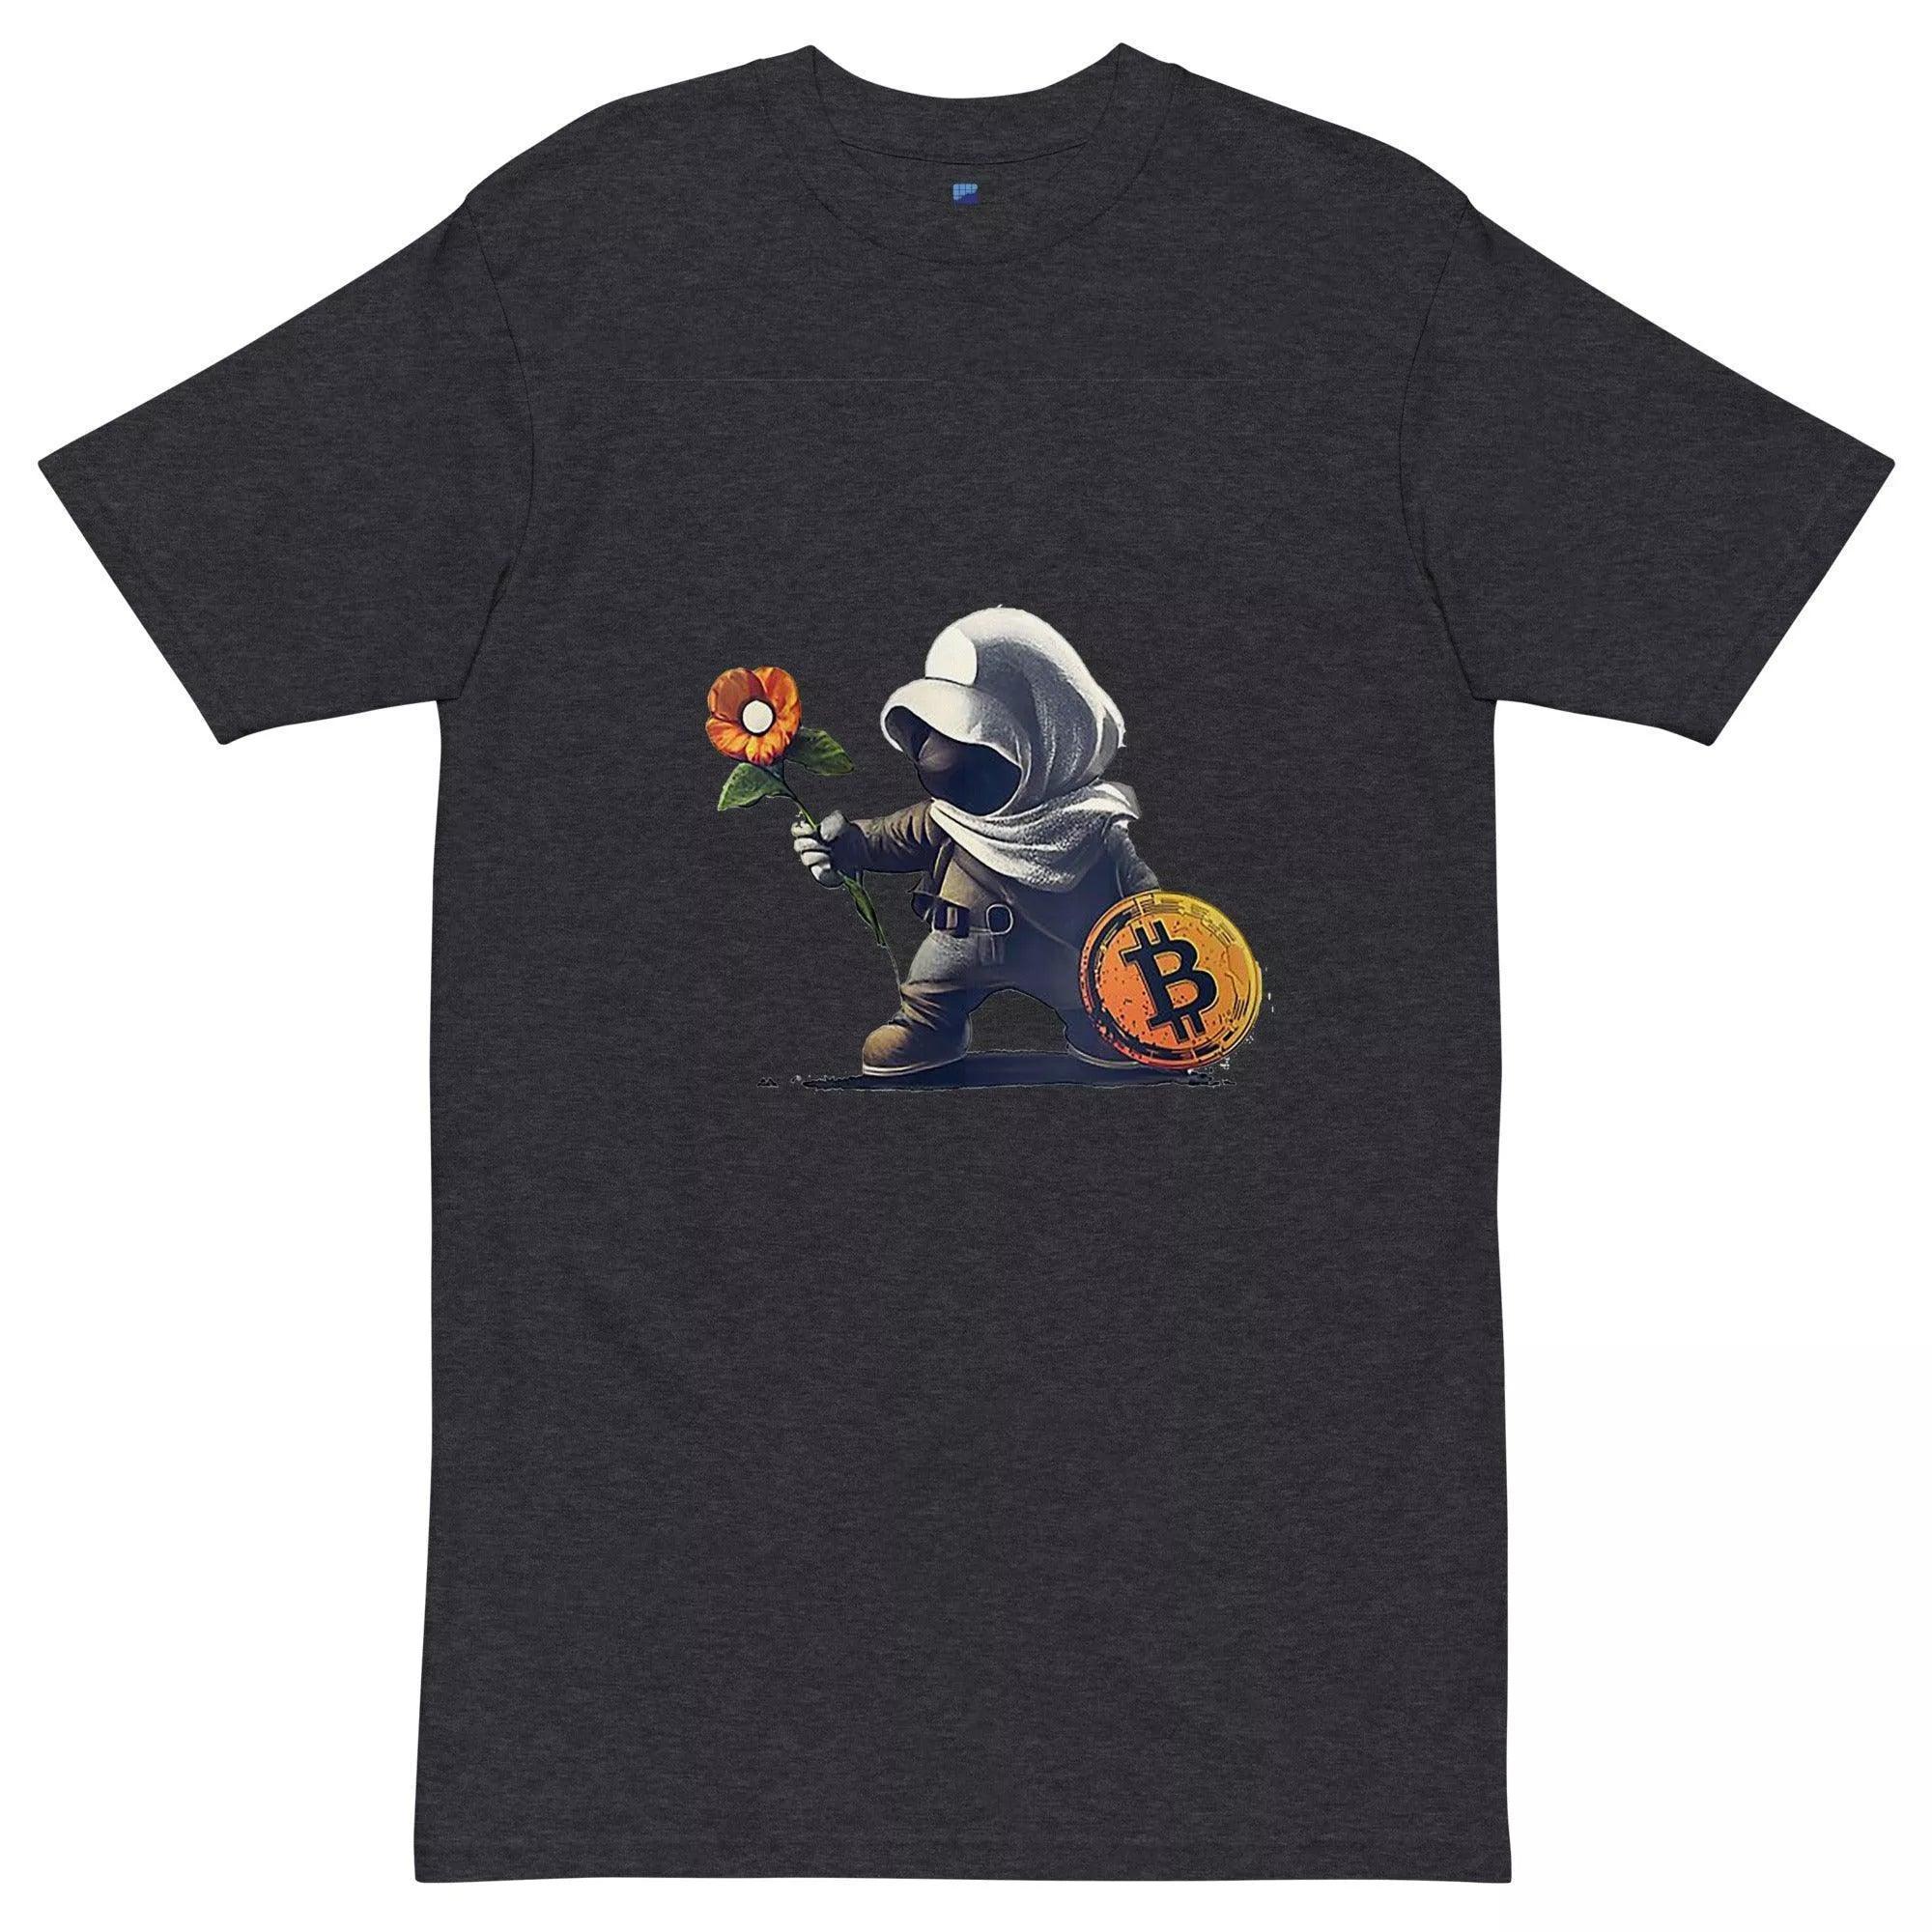 Bitcoin Samurai Warrior T-Shirt - InvestmenTees